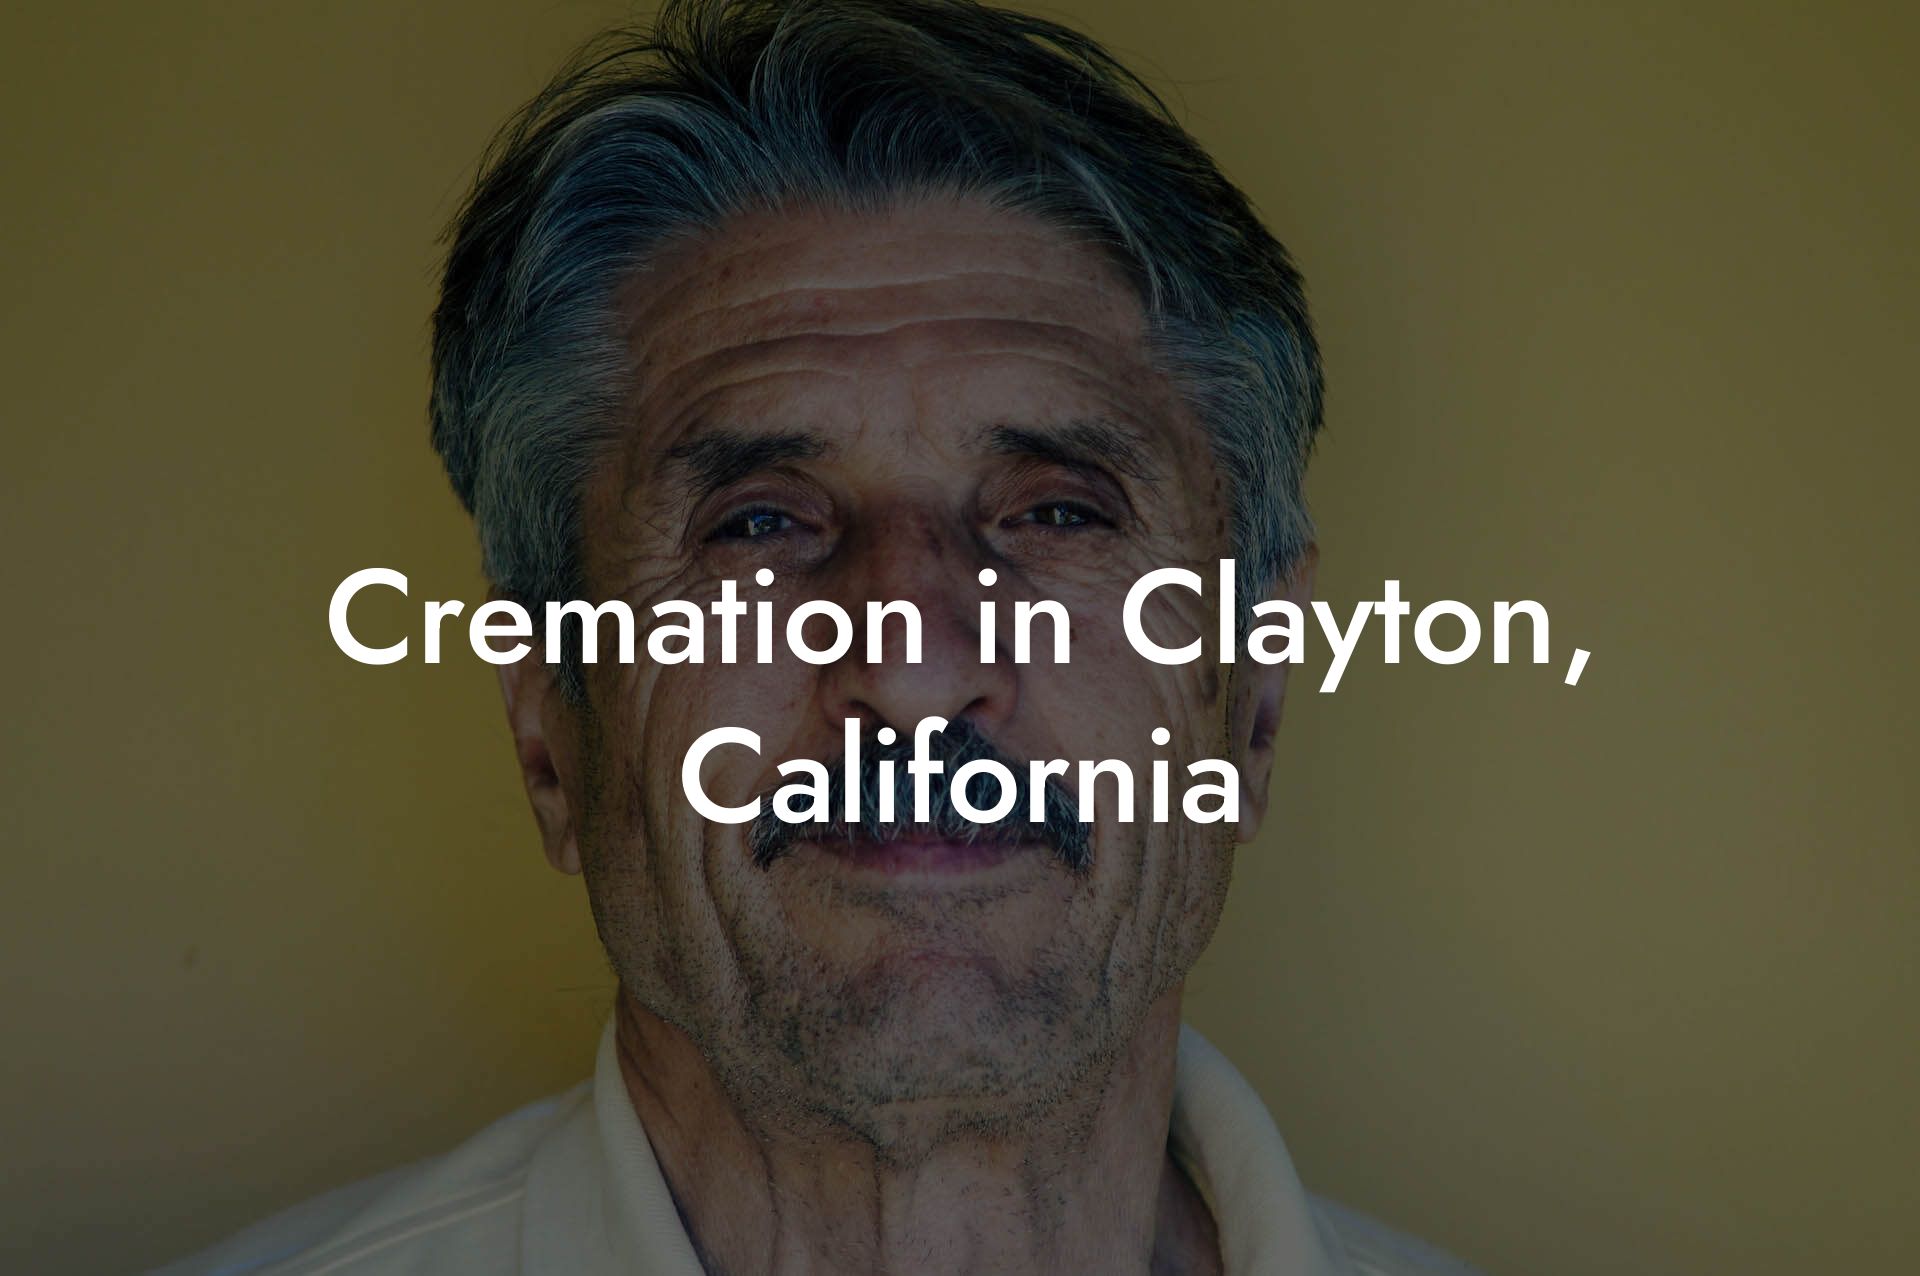 Cremation in Clayton, California